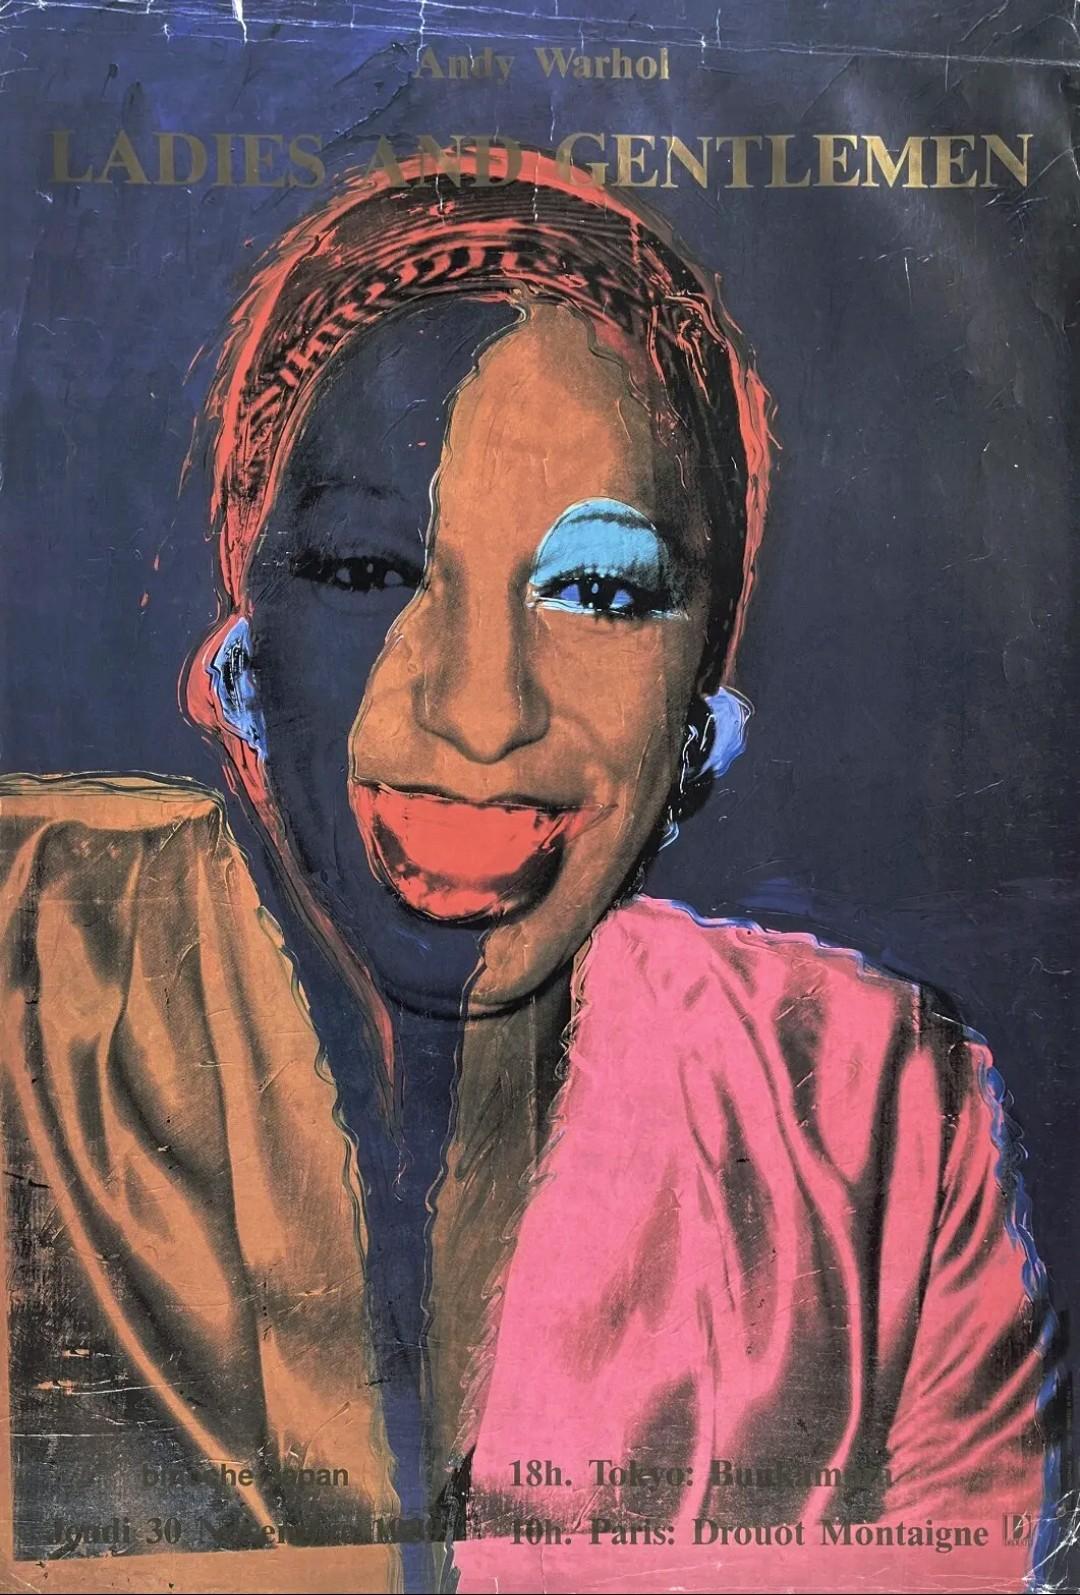 Ladies and Gentlemen Exhibition Poster (Portrait of Wilhelmina Ross) (1989)
Andy Warhol Vintage 1989 Pop Art Lithograph Print Framed Paris Exhibition Poster " Ladies and Gentlemen ( Wilhelmina Ross ) " 1975
This Andy Warhol rare vintage 1989 Pop Art